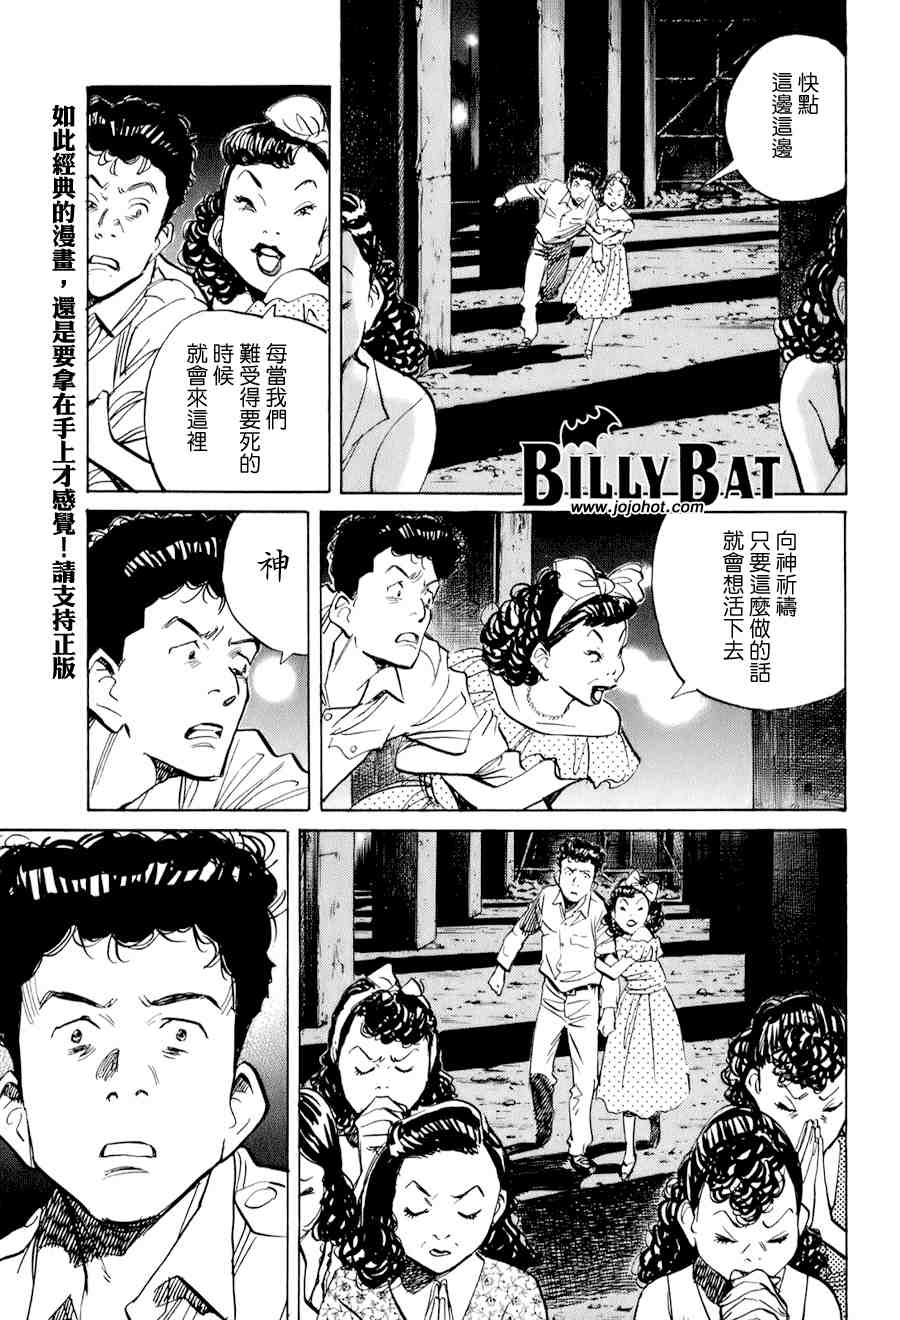 Billy_Bat - 第1卷(3/4) - 5